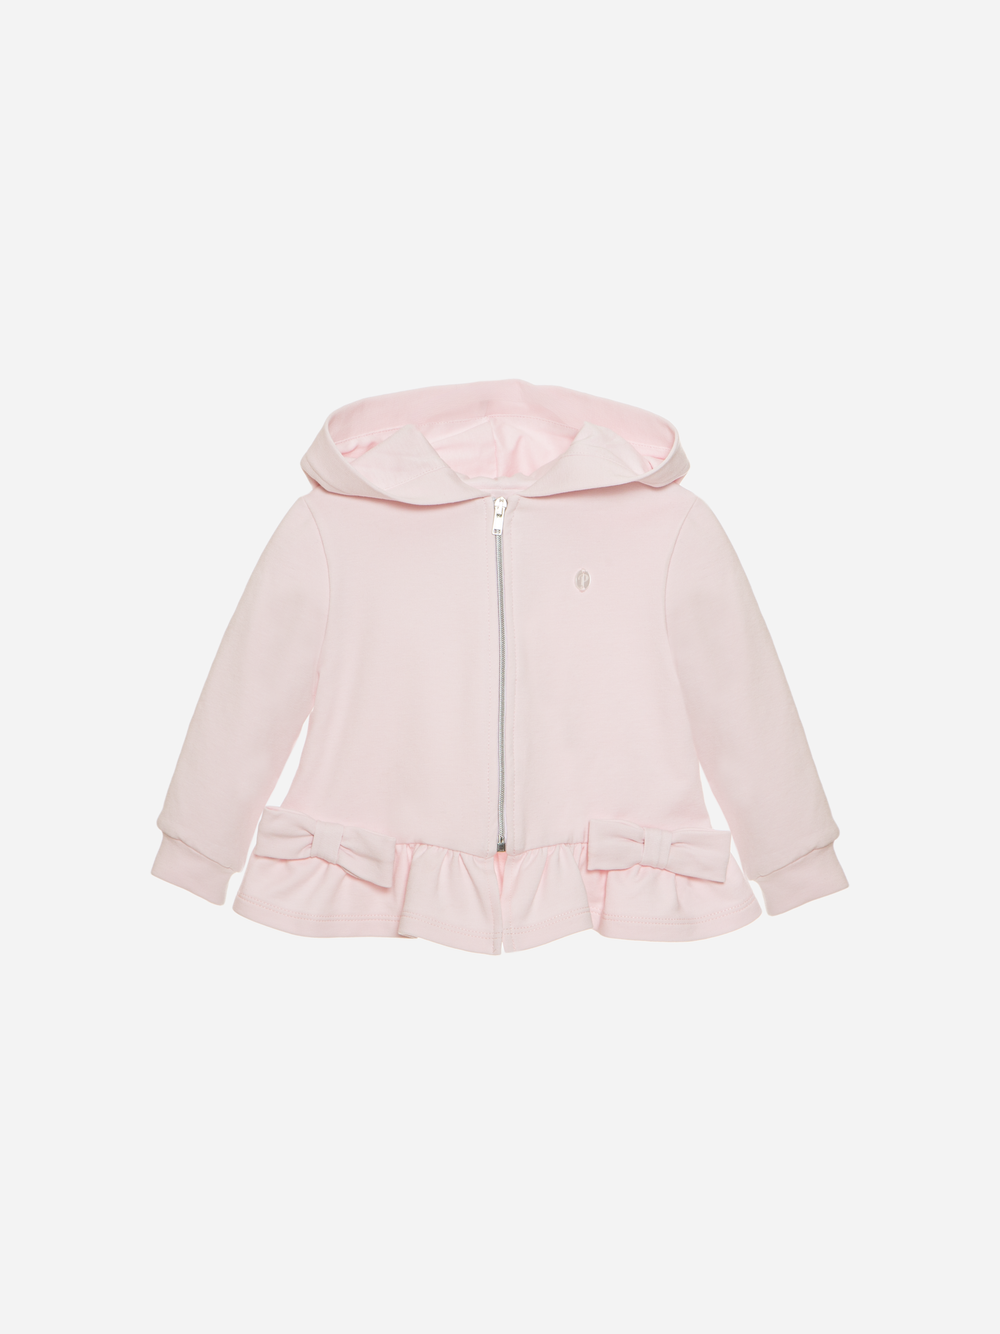 Girls pink hooded coat